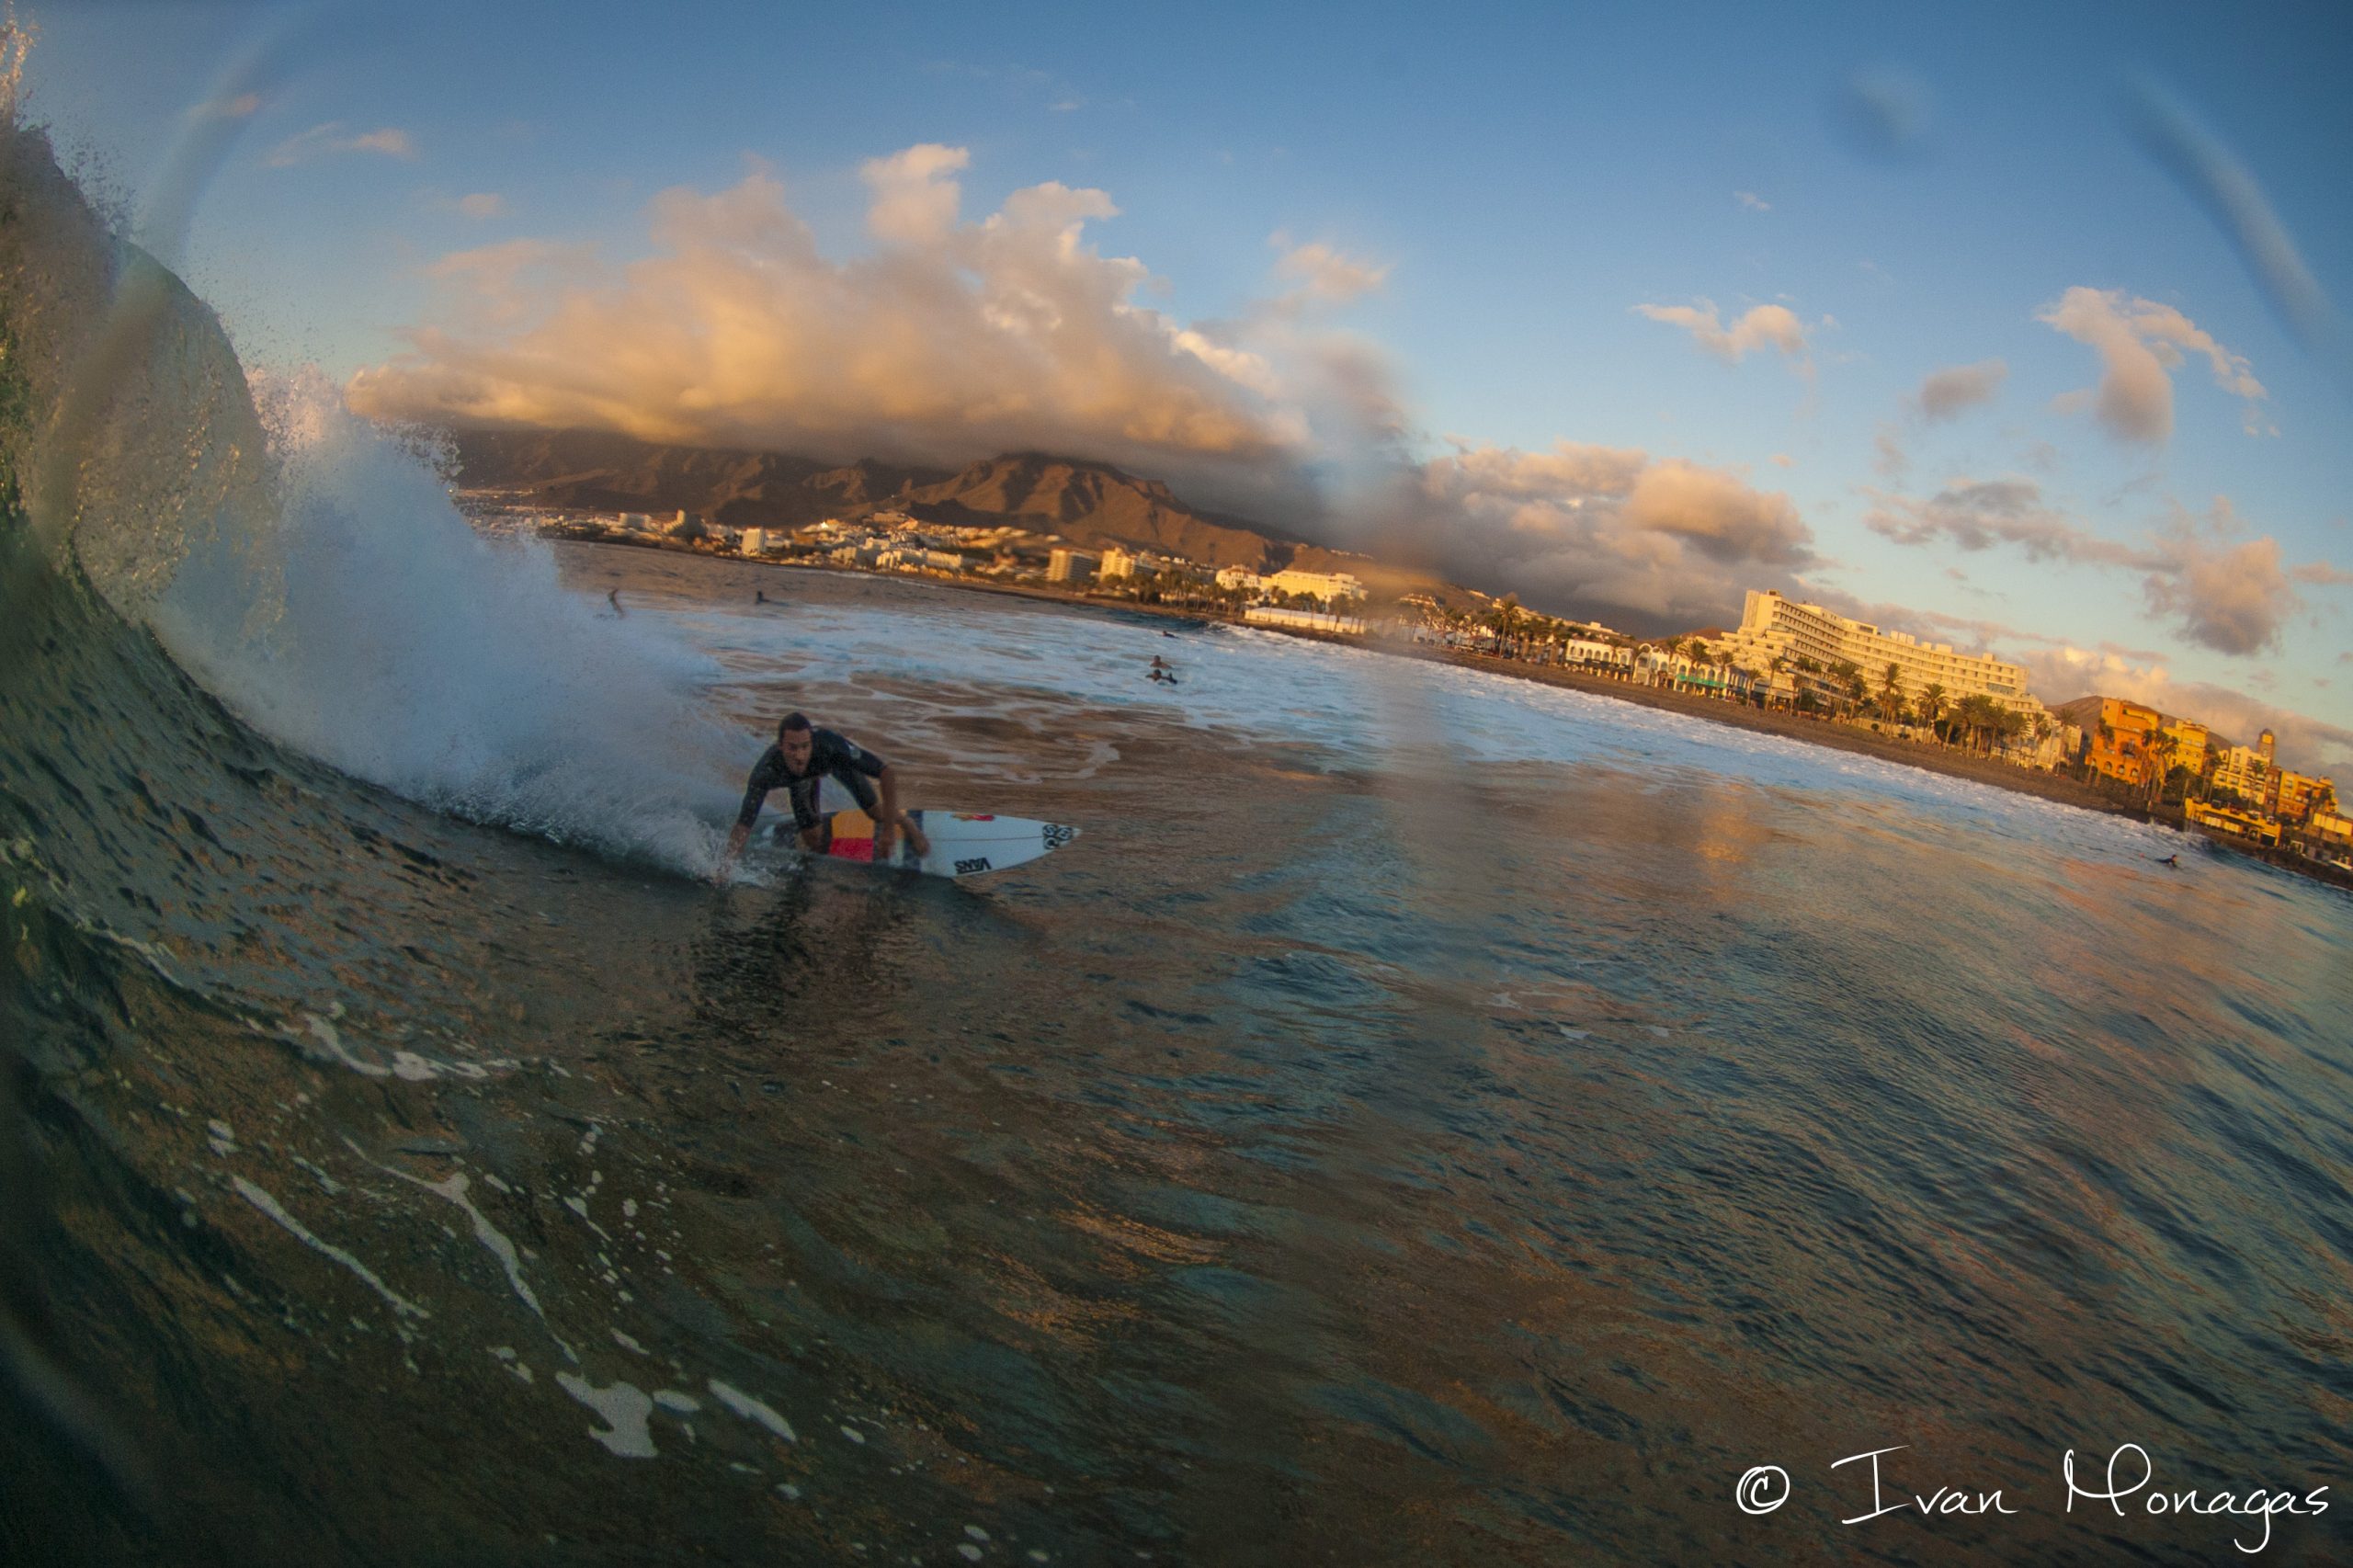 Advanced surfer surfing in Playa las Américas in Tenerife